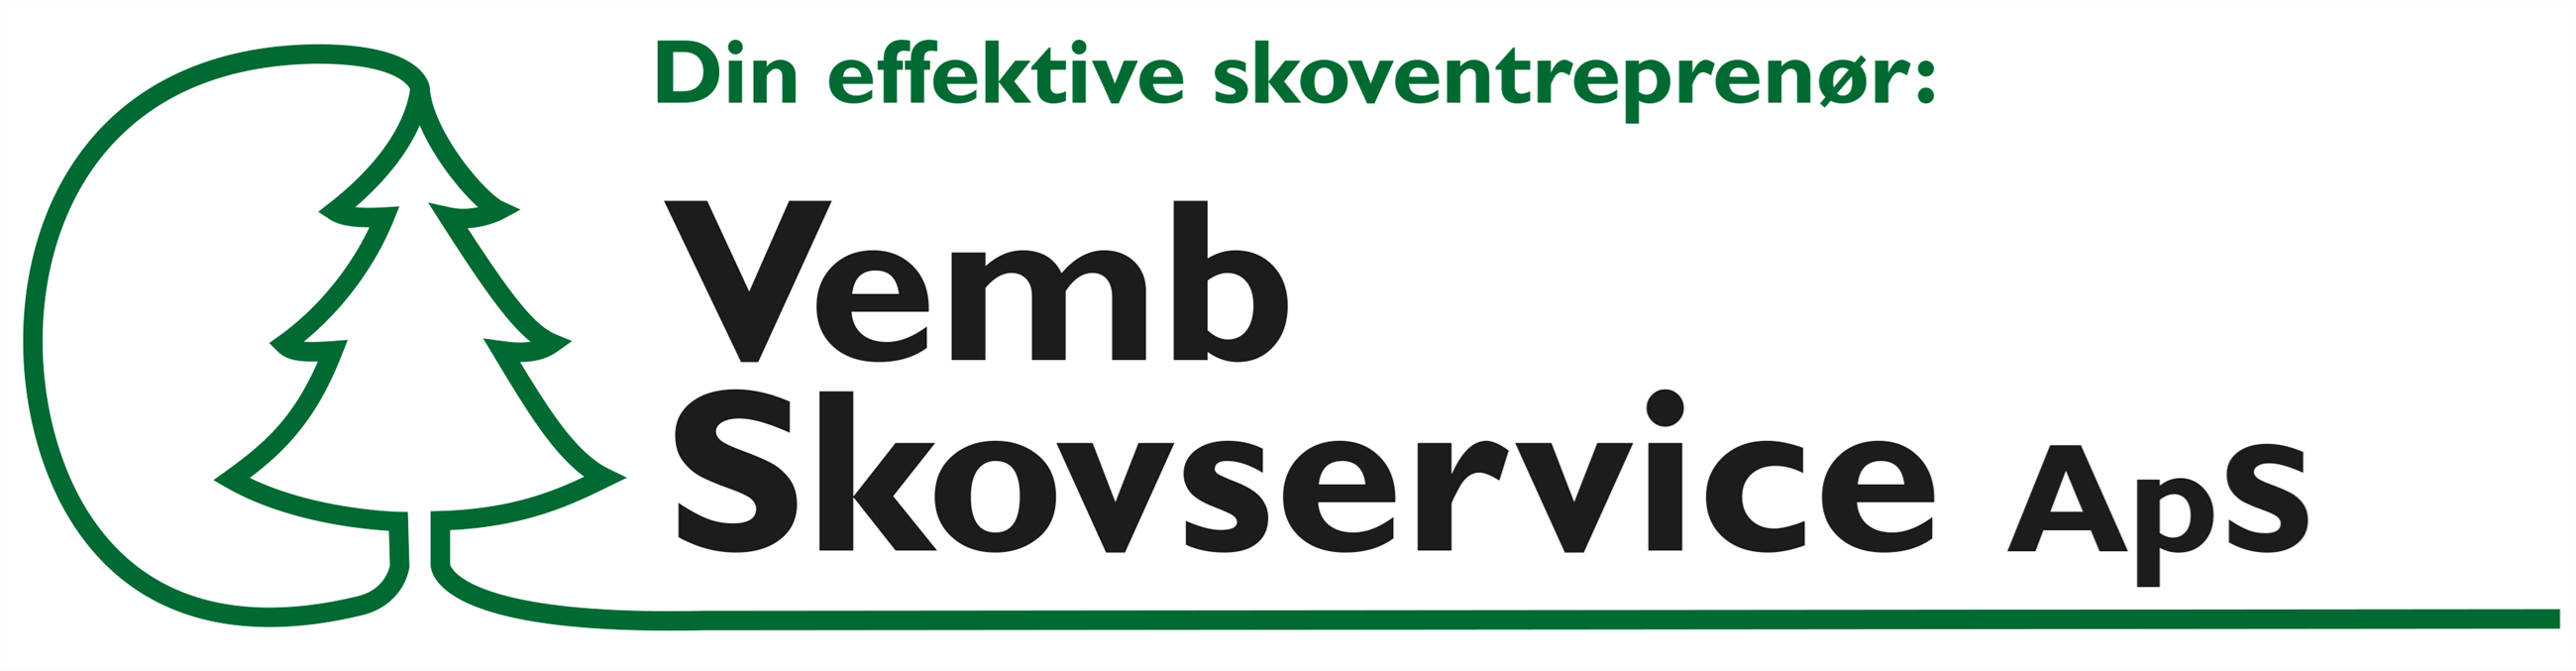 Vemb Skovservice nær Herning & Holstebro | Logo